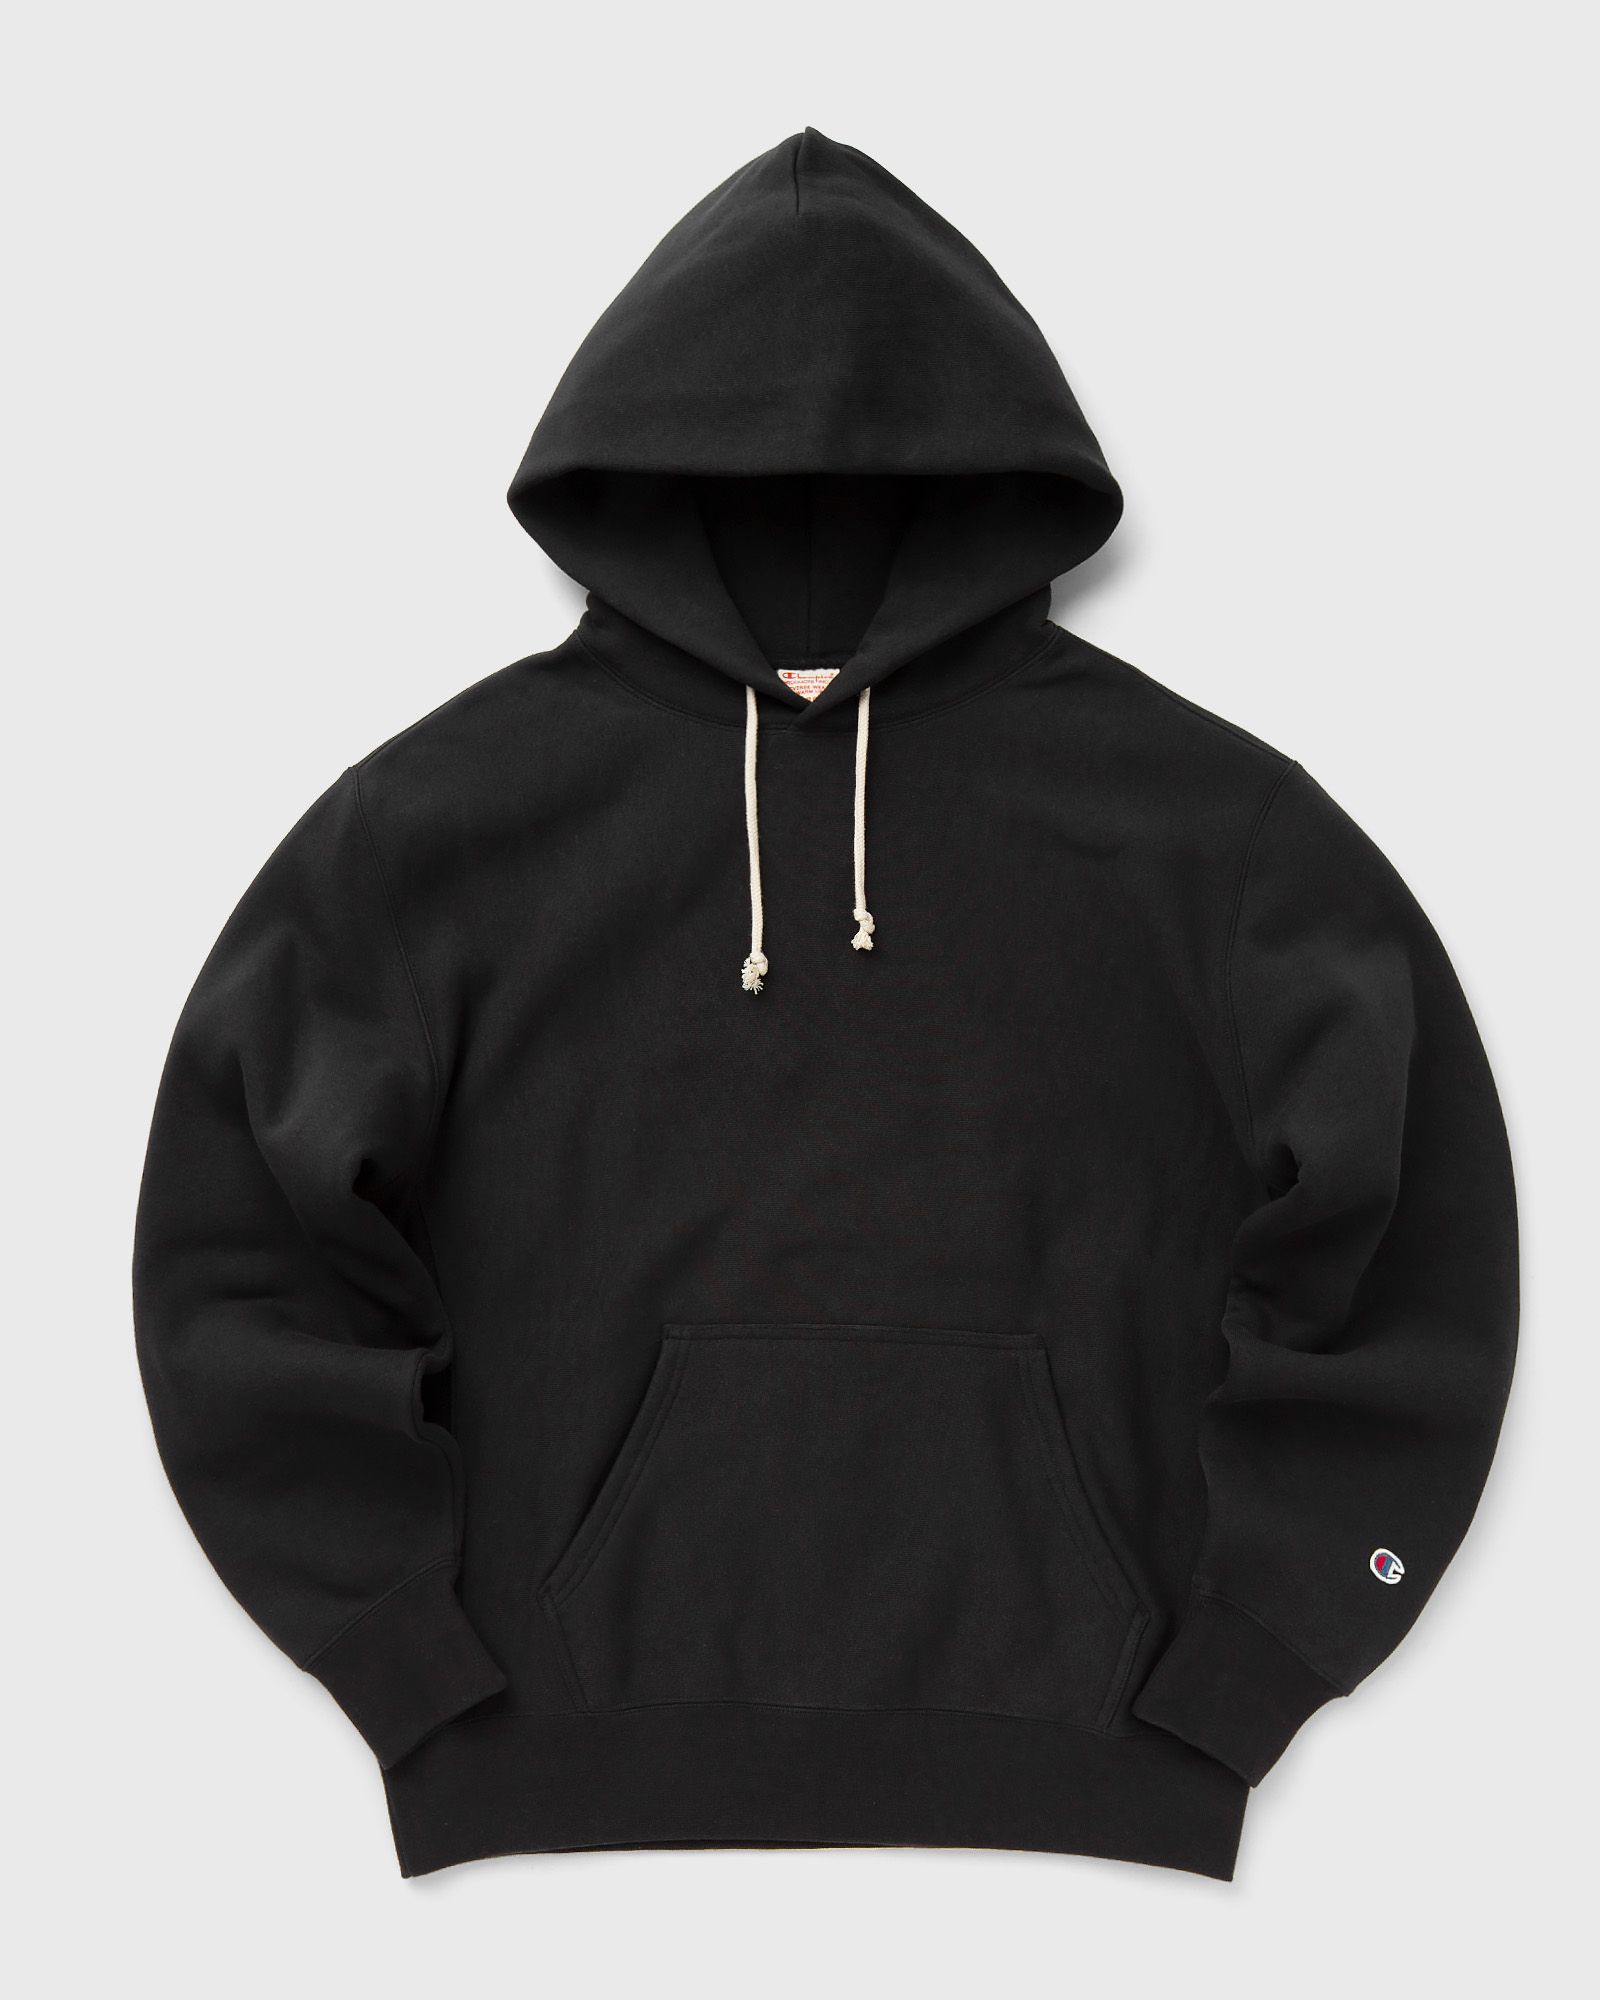 CHAMPION - hooded sweatshirt men hoodies black in größe:xxl